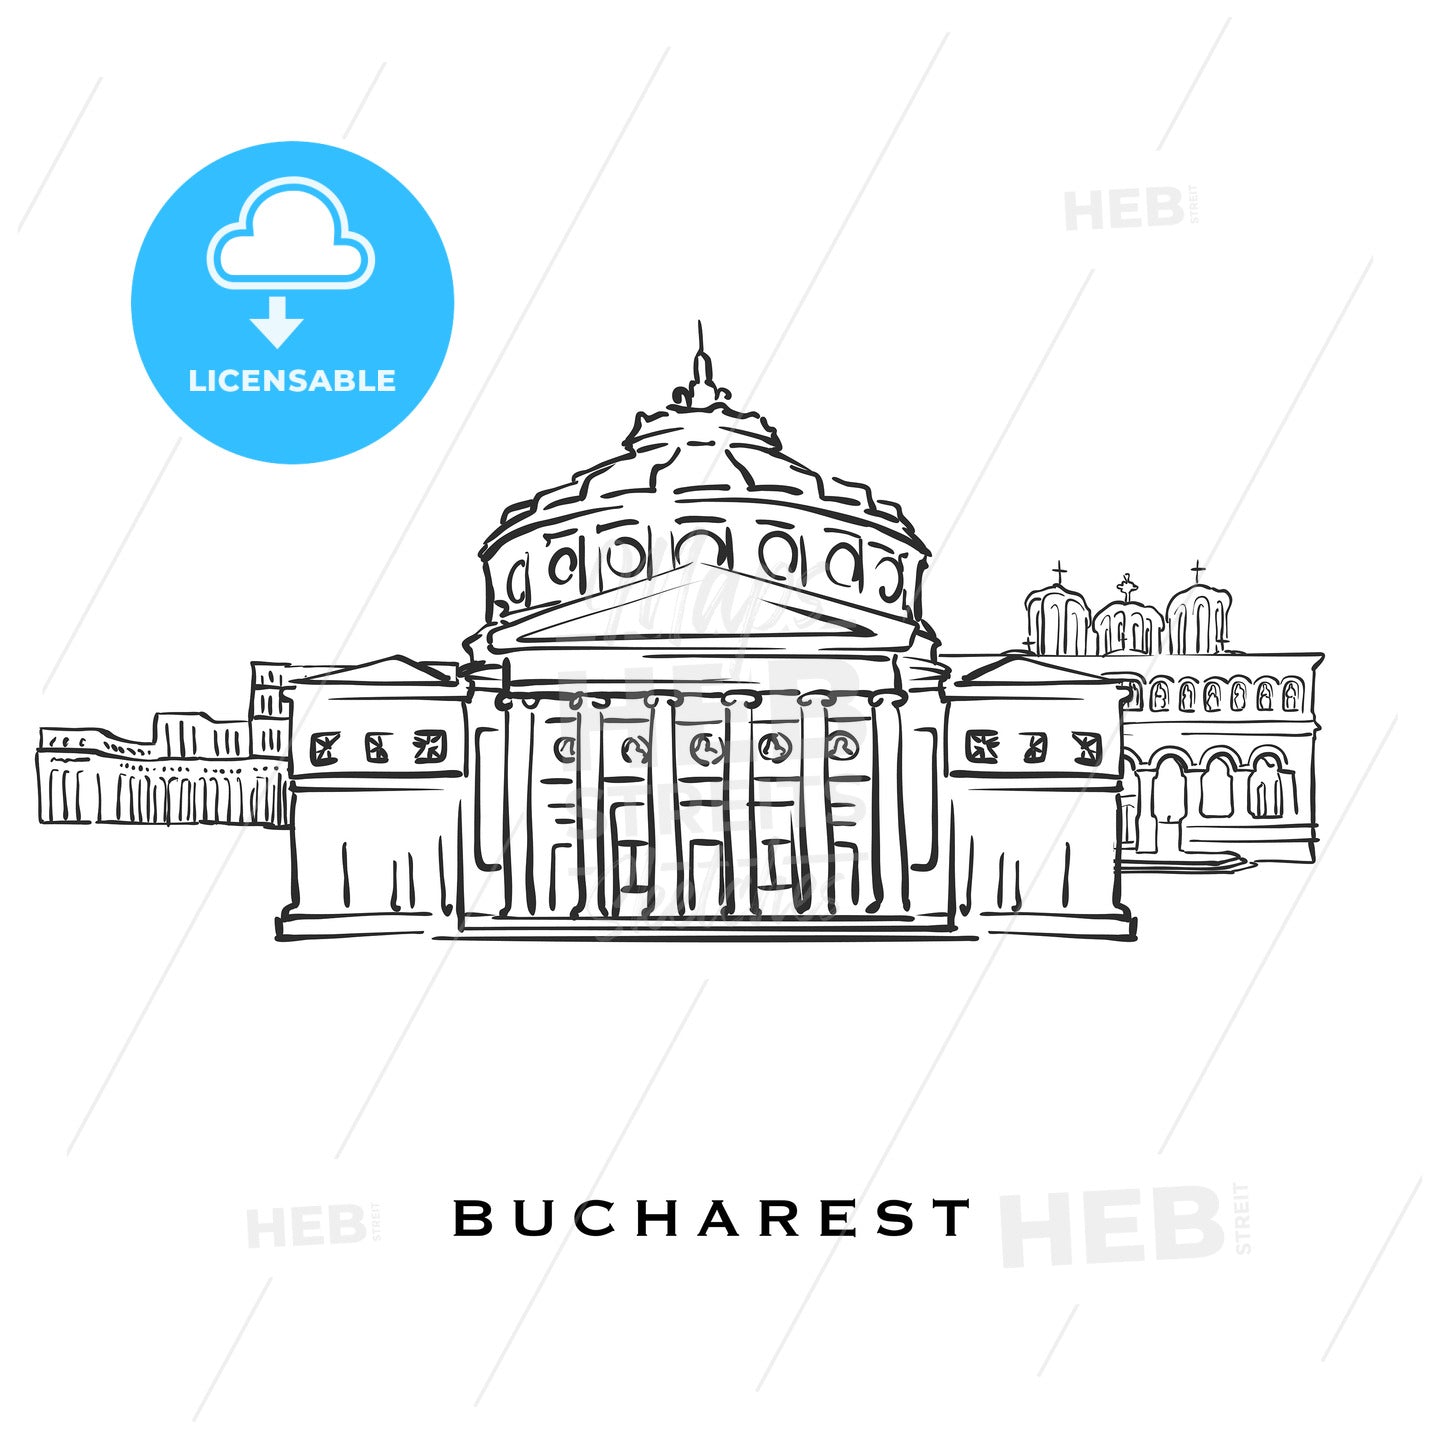 Bucharest Romania famous architecture – instant download